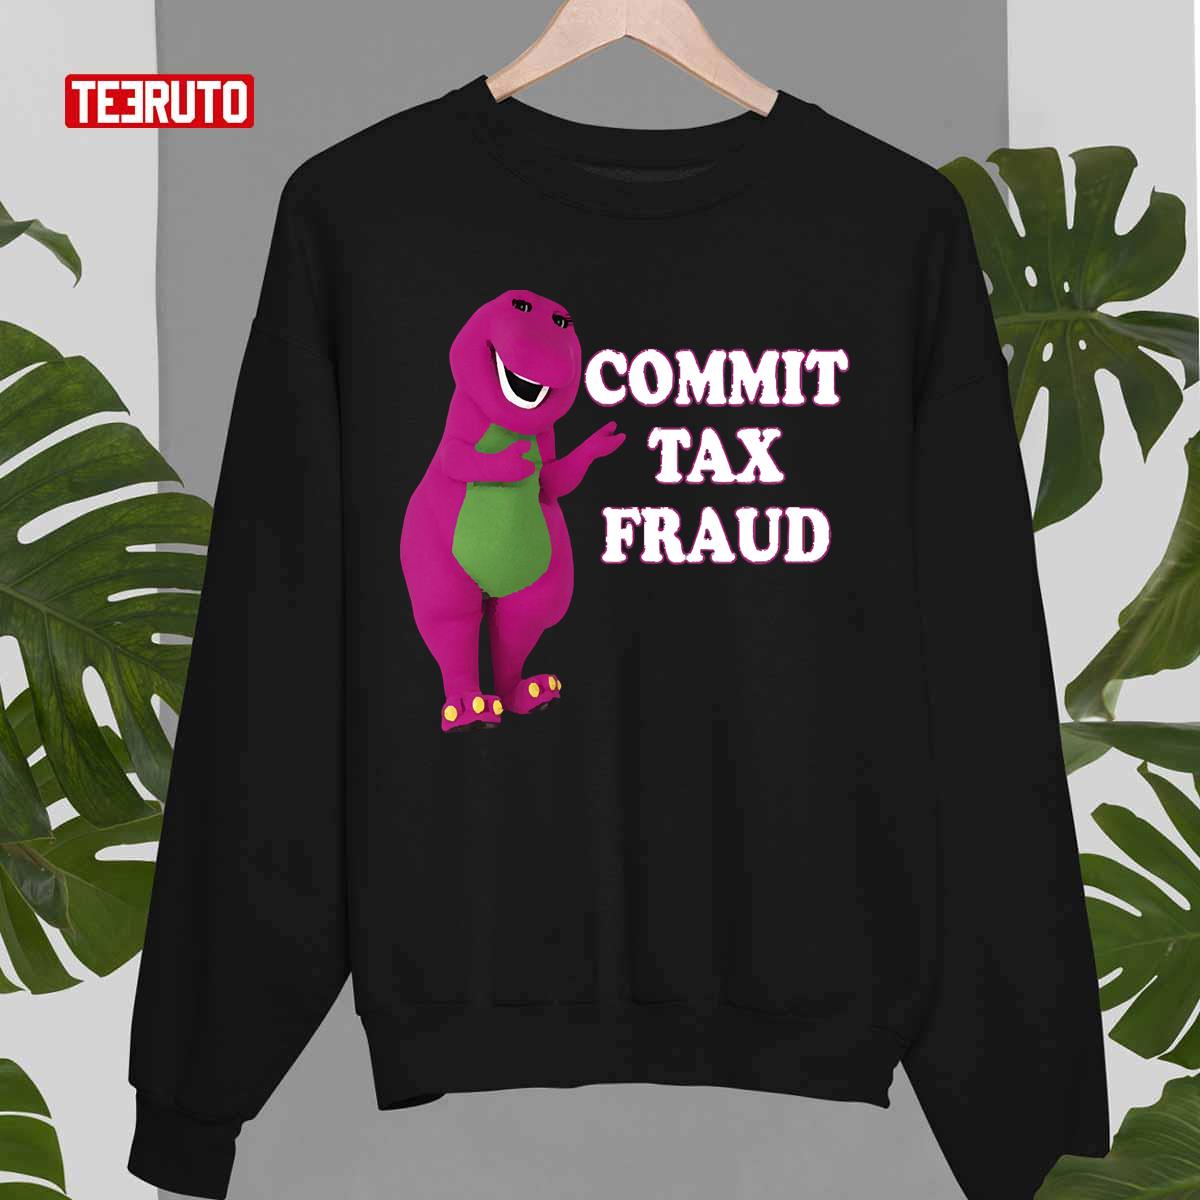 Commit Tax Fraud Unisex T-Shirt Sweatshirt